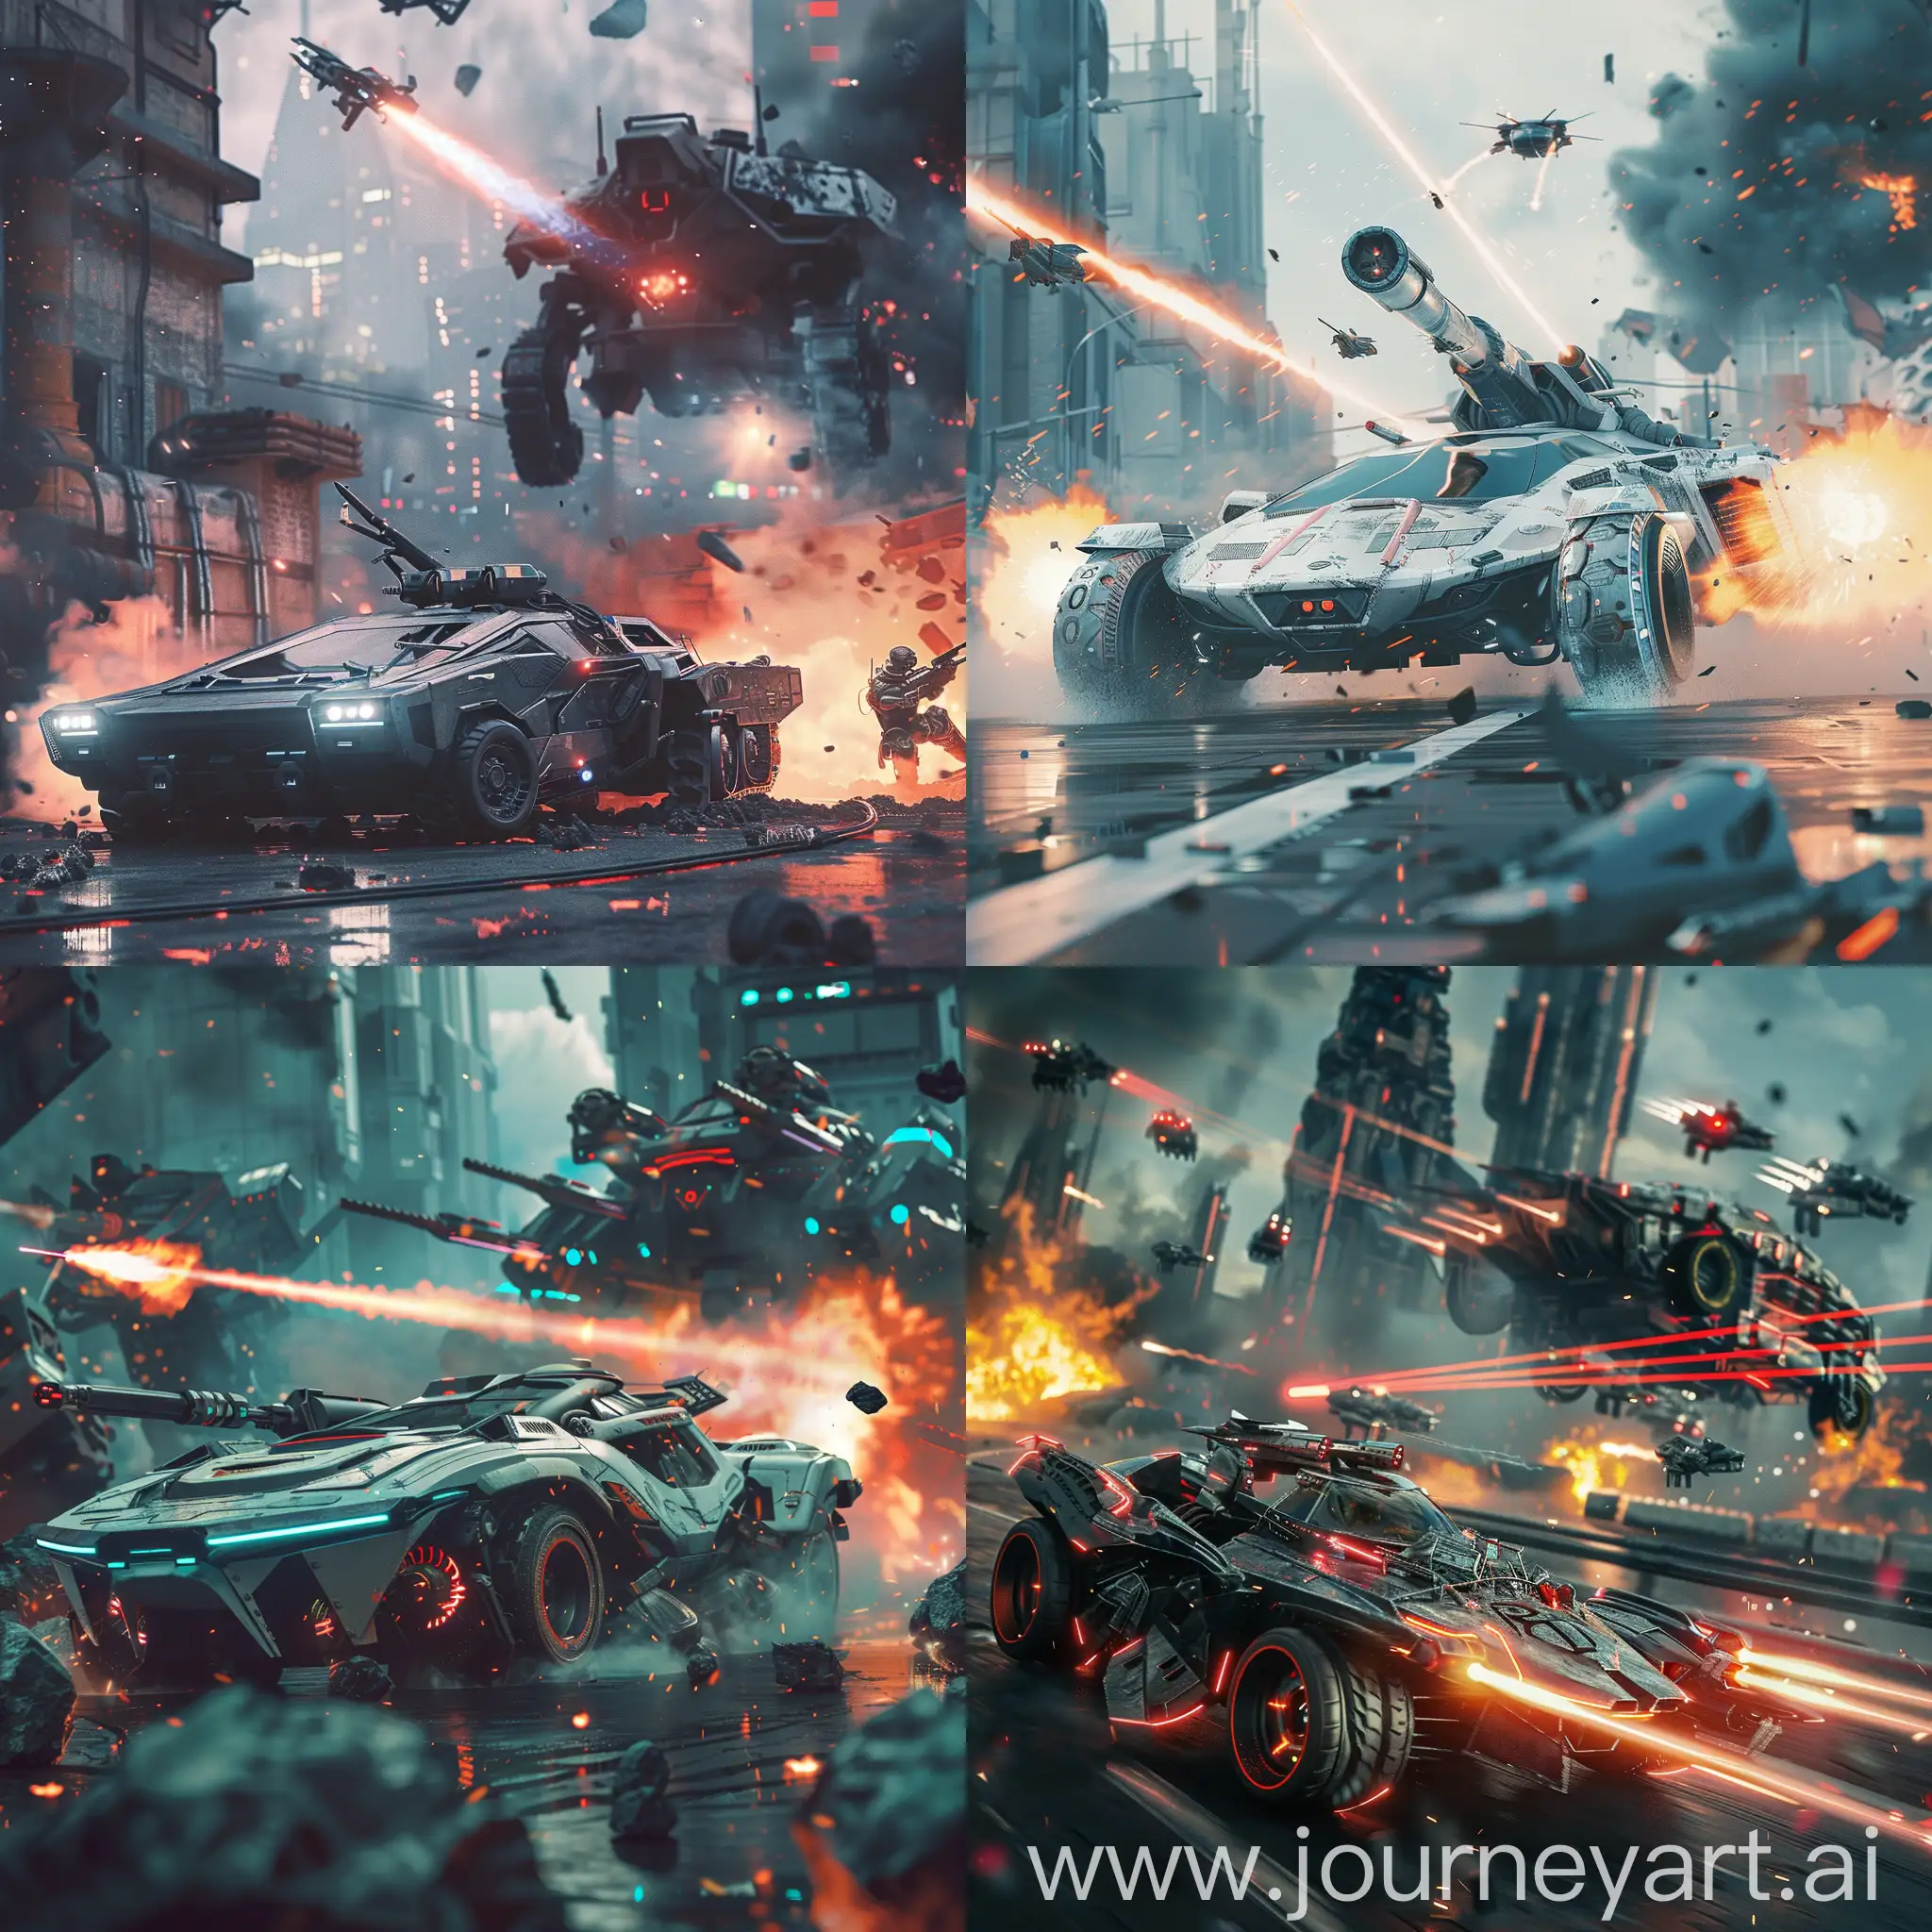 a mix of futuristic mech car and tank with plasma guns, photorealistic dynamic scene, futuristic war